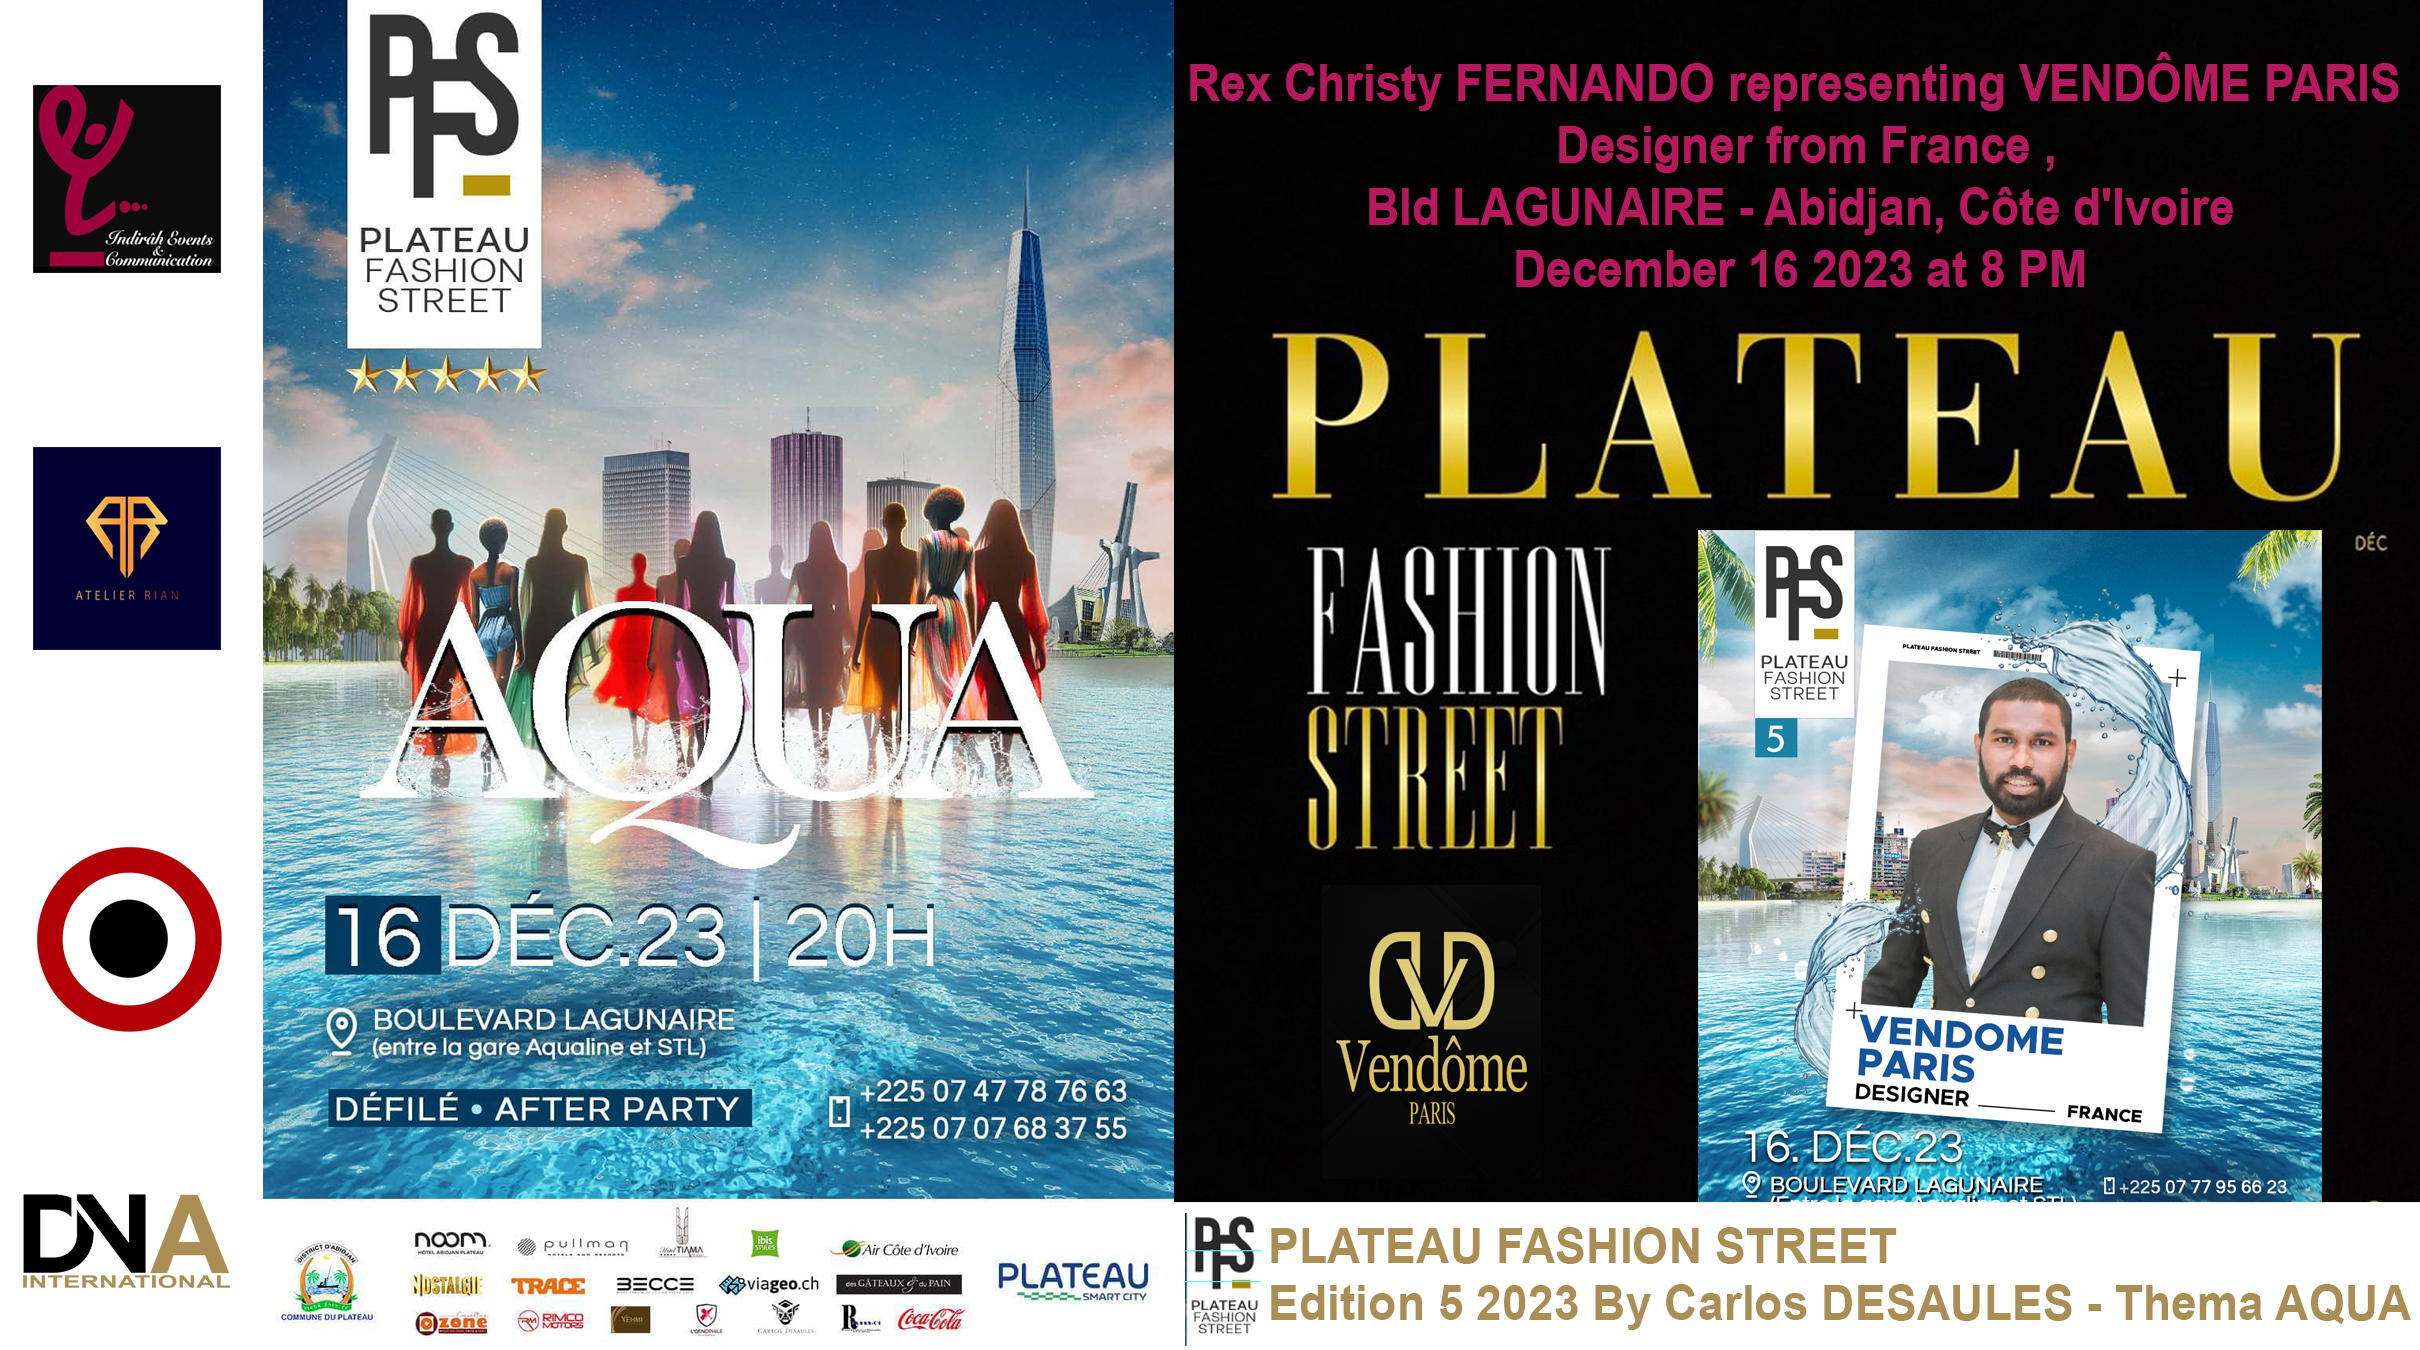 AFRICA-VOGUE-COVER-Plateau-Fashion-Street-5-by-Carlos-DESAULES-Thema-AQUA-Rex-Christy-FERNANDO-representing-VENDÔME-PARIS-Designer-from-France-DN-AFRICA-DN-A-INTERNATIONAL-Media-Partener